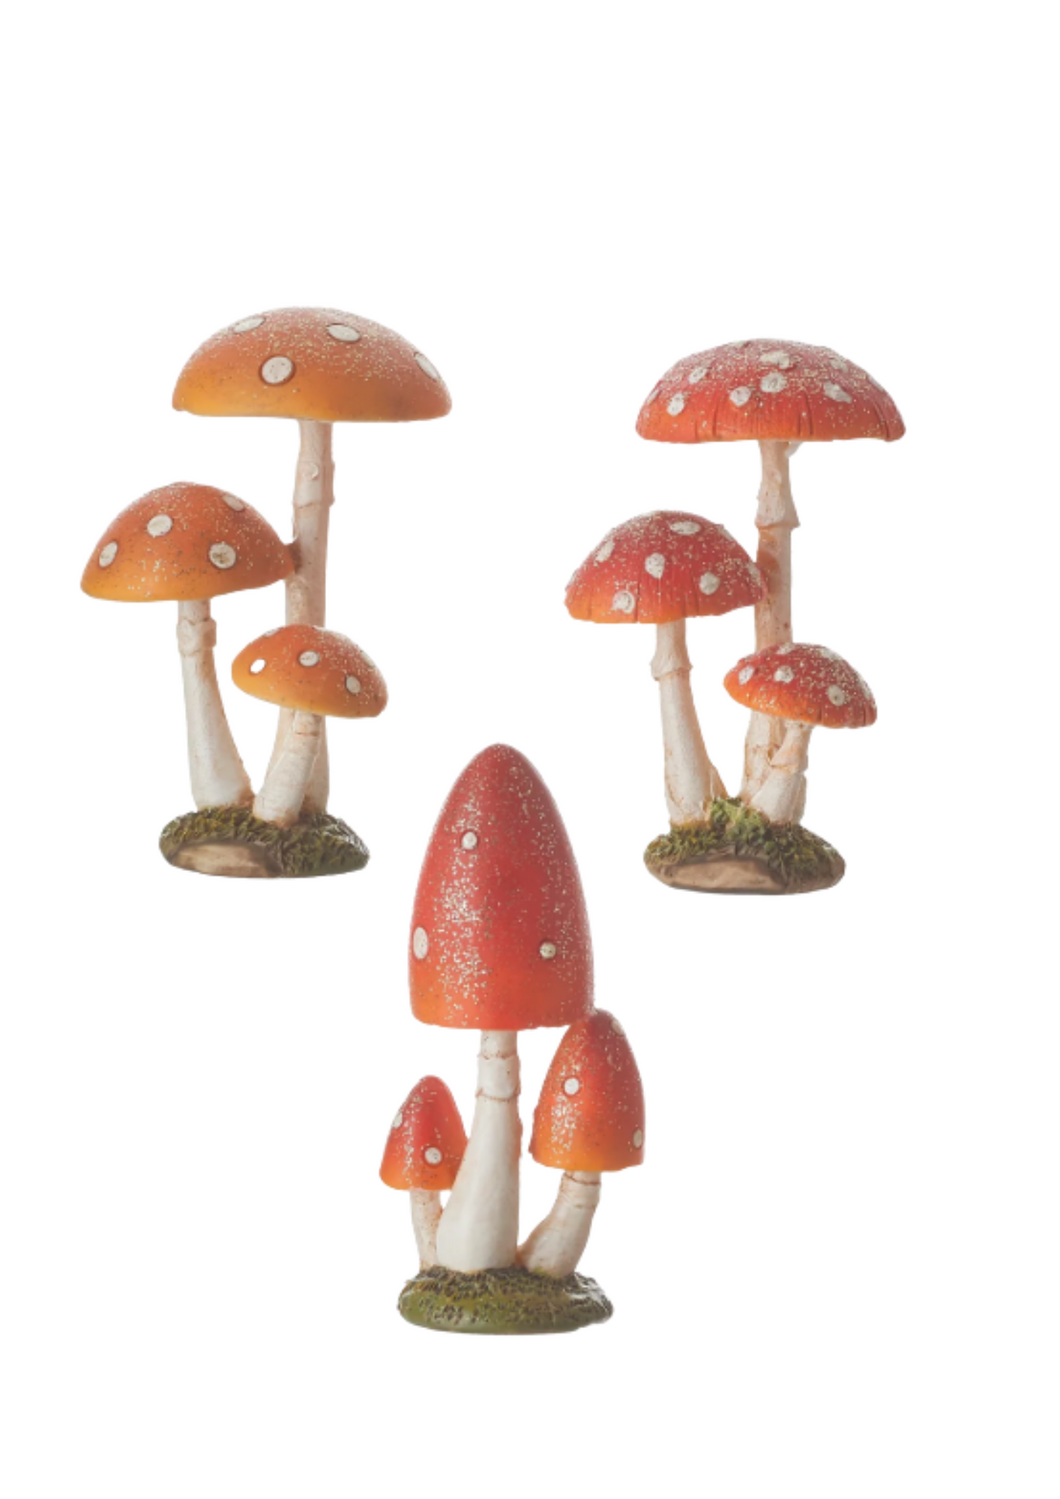 Magical Sparkly Mushrooms